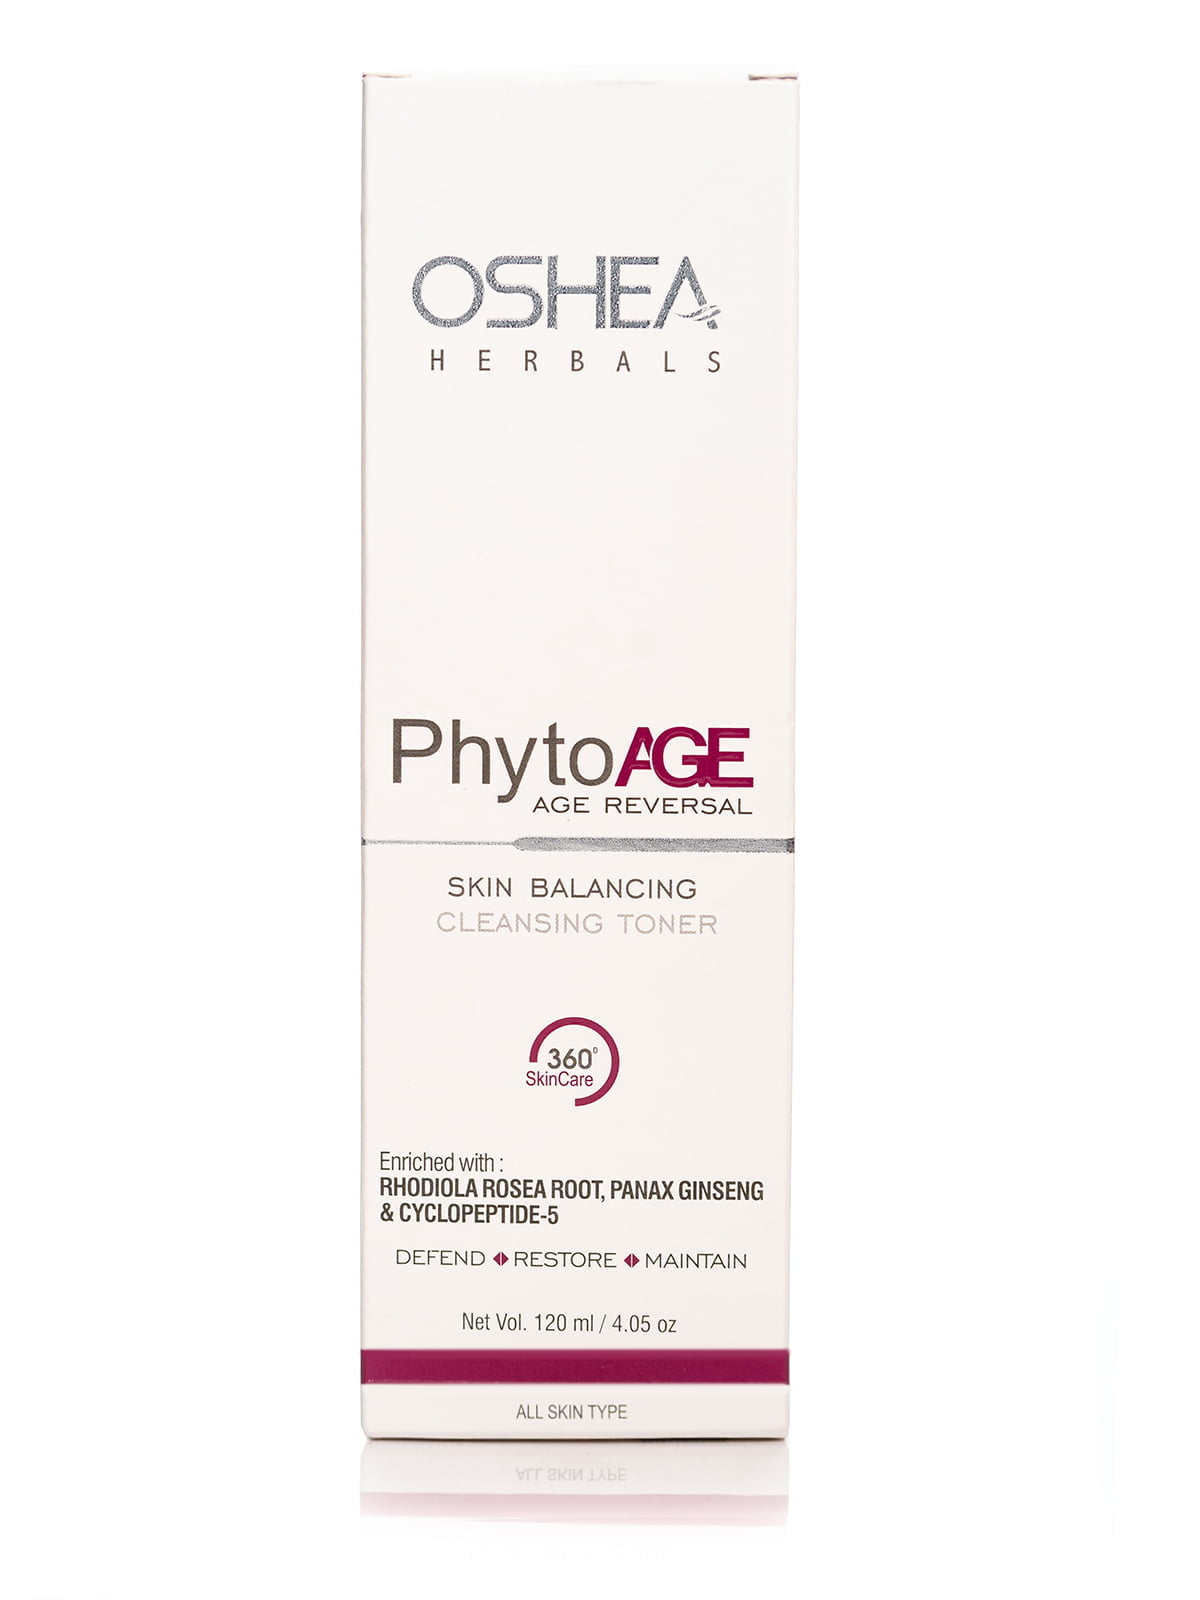 Phytoage Age Reversal Skin Balancing Cleansing Toner